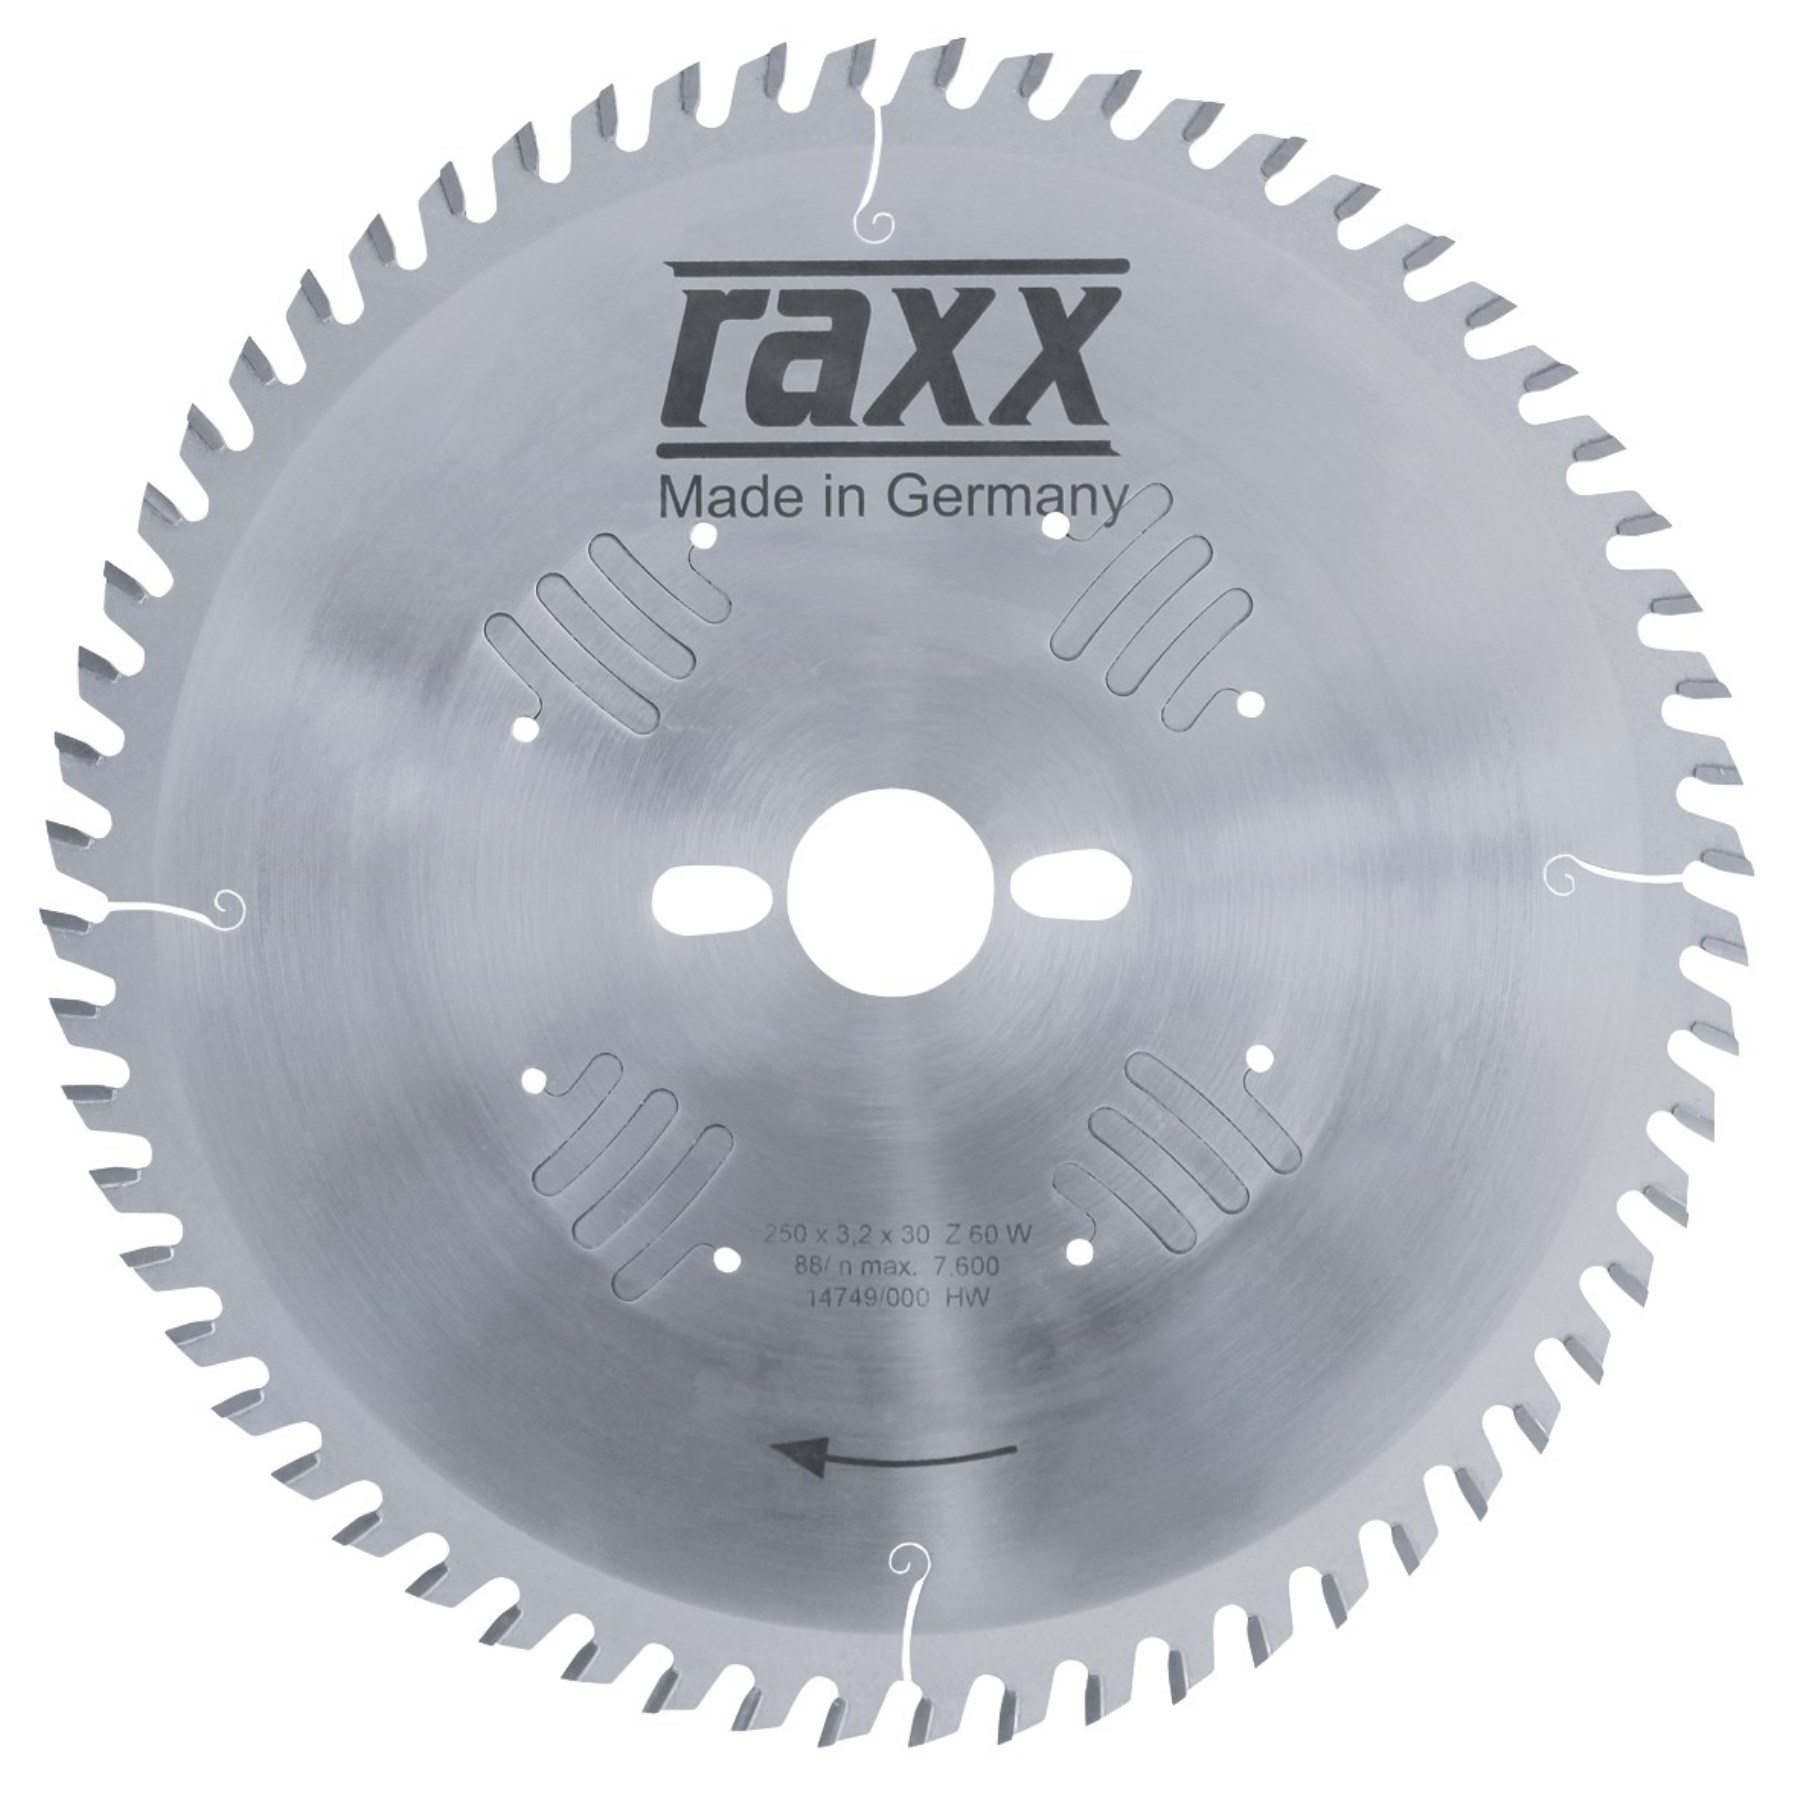 RAXX 1205069 kotouč k okružní pile HM 300x3,2x30 [ 55300300720060400 ]